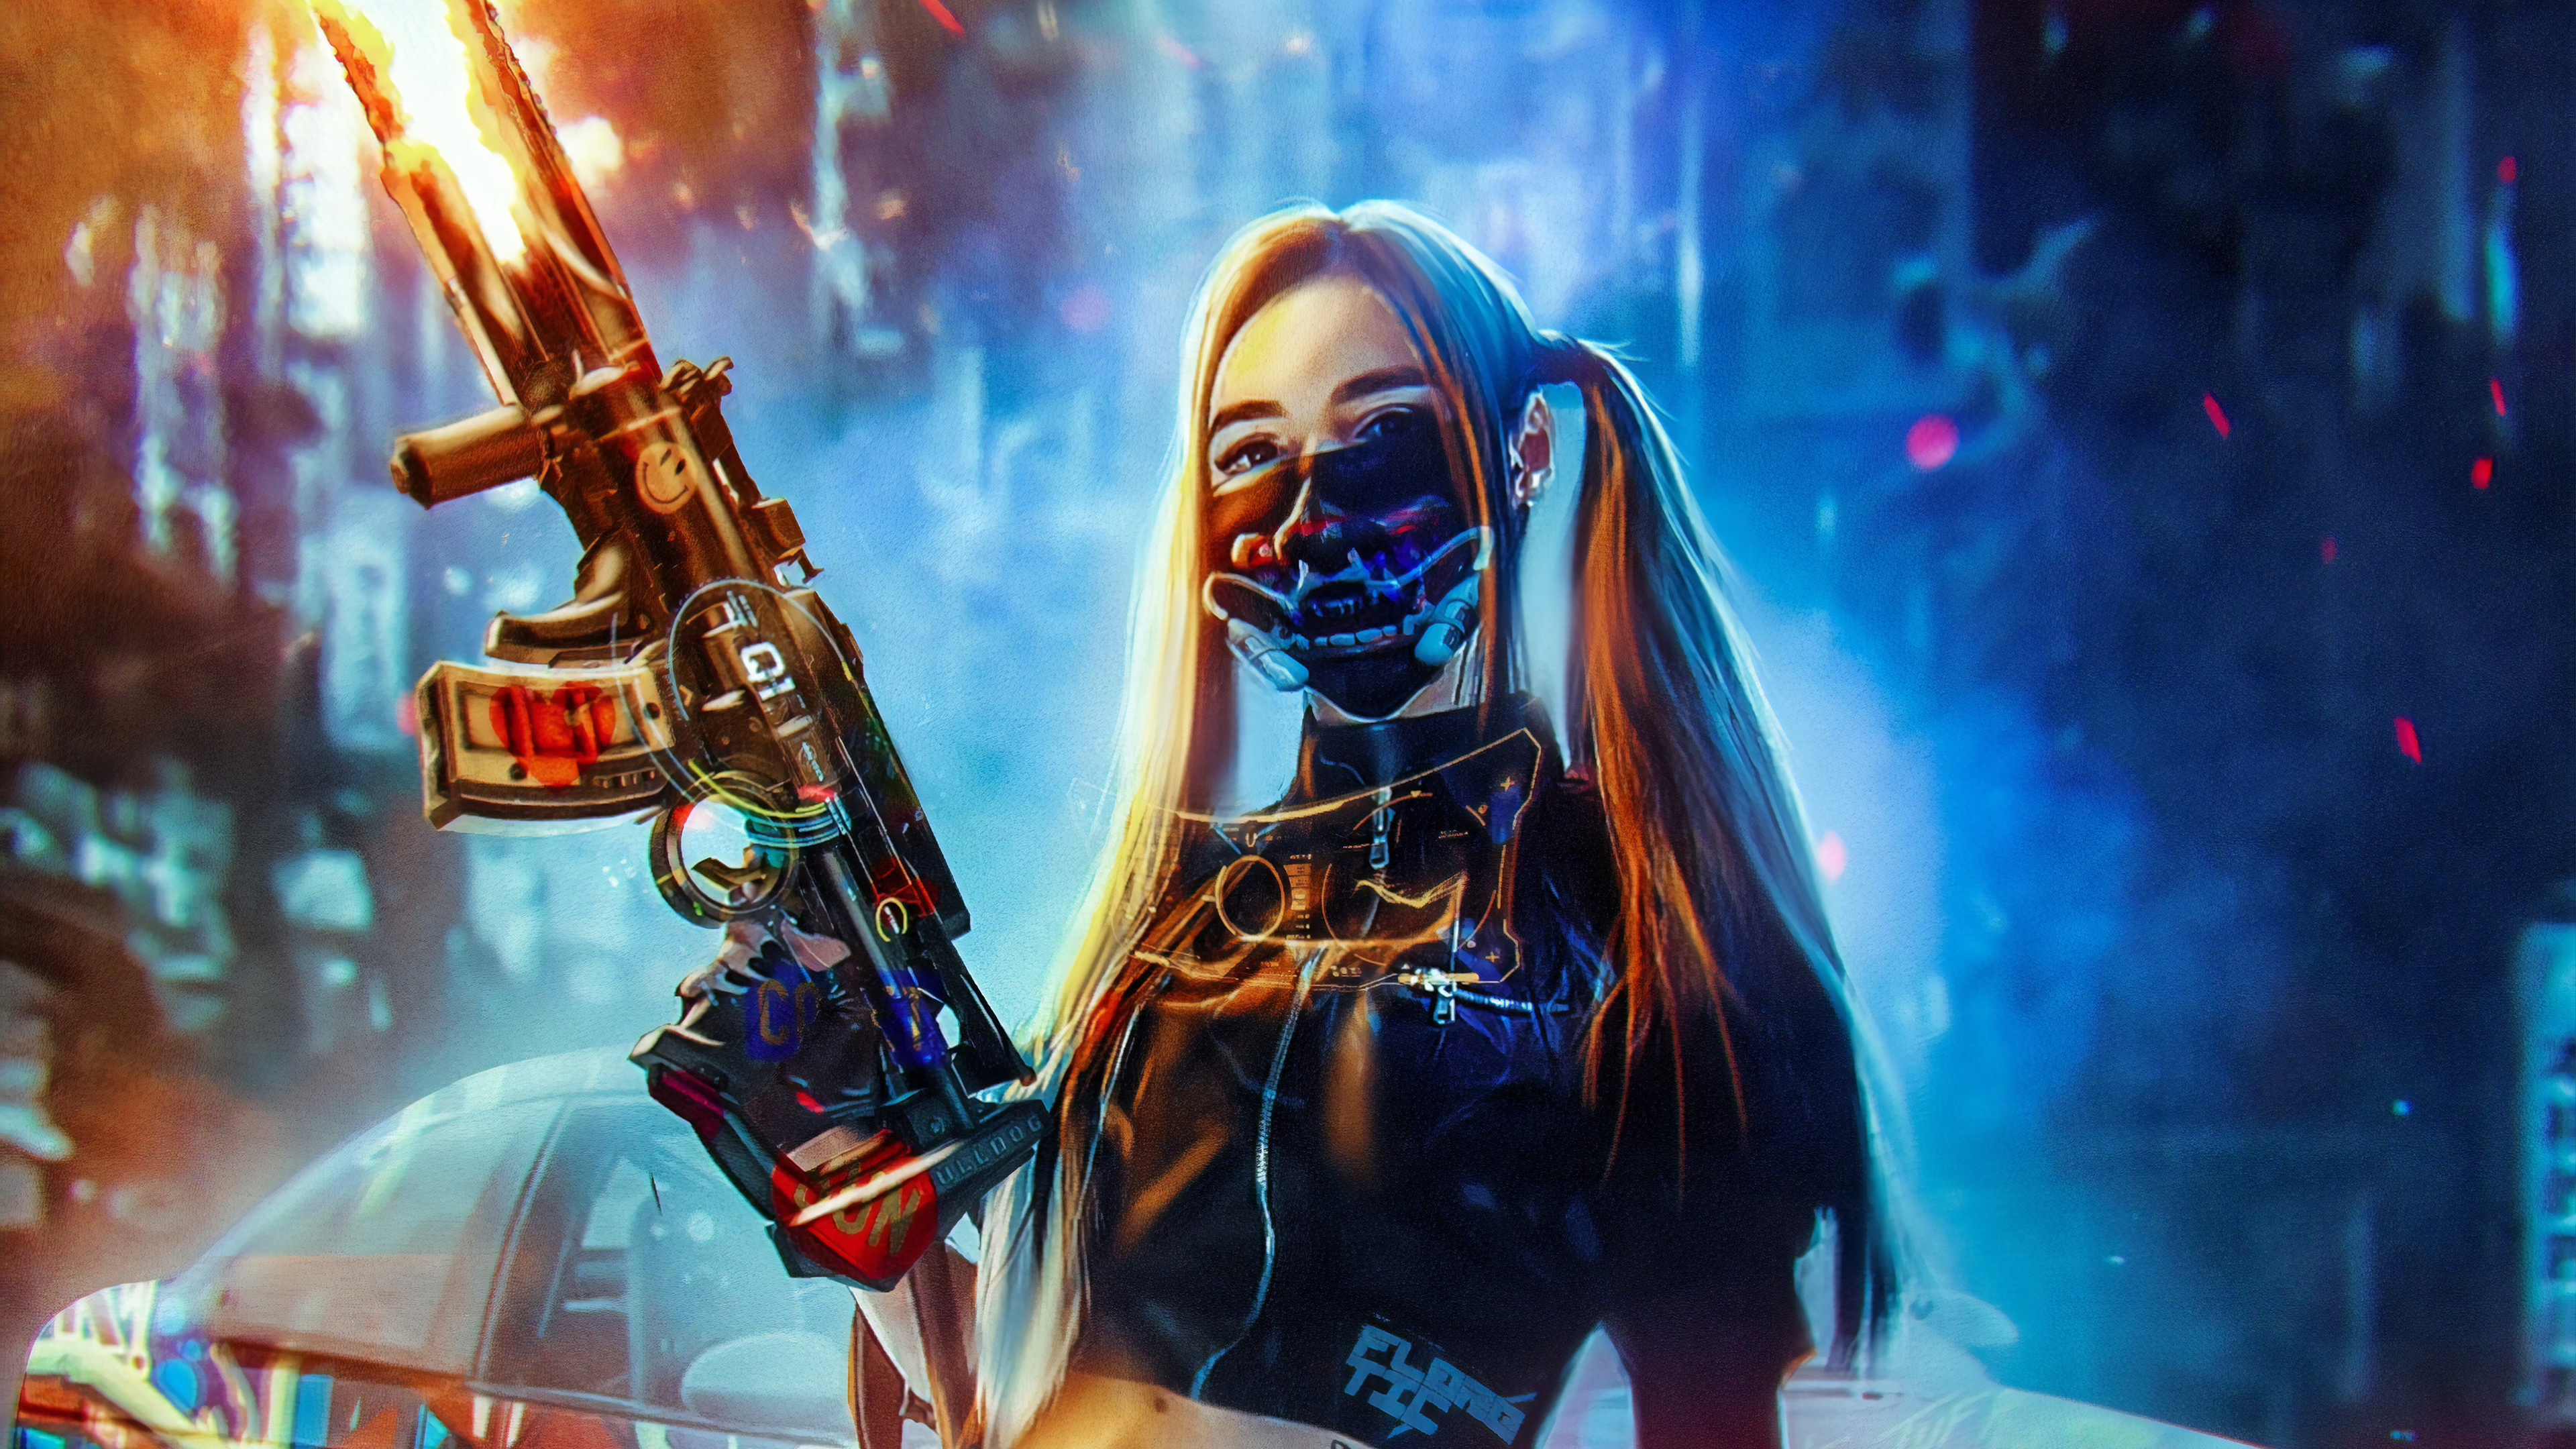 Cyberpunk Girl - HD Wallpaper 